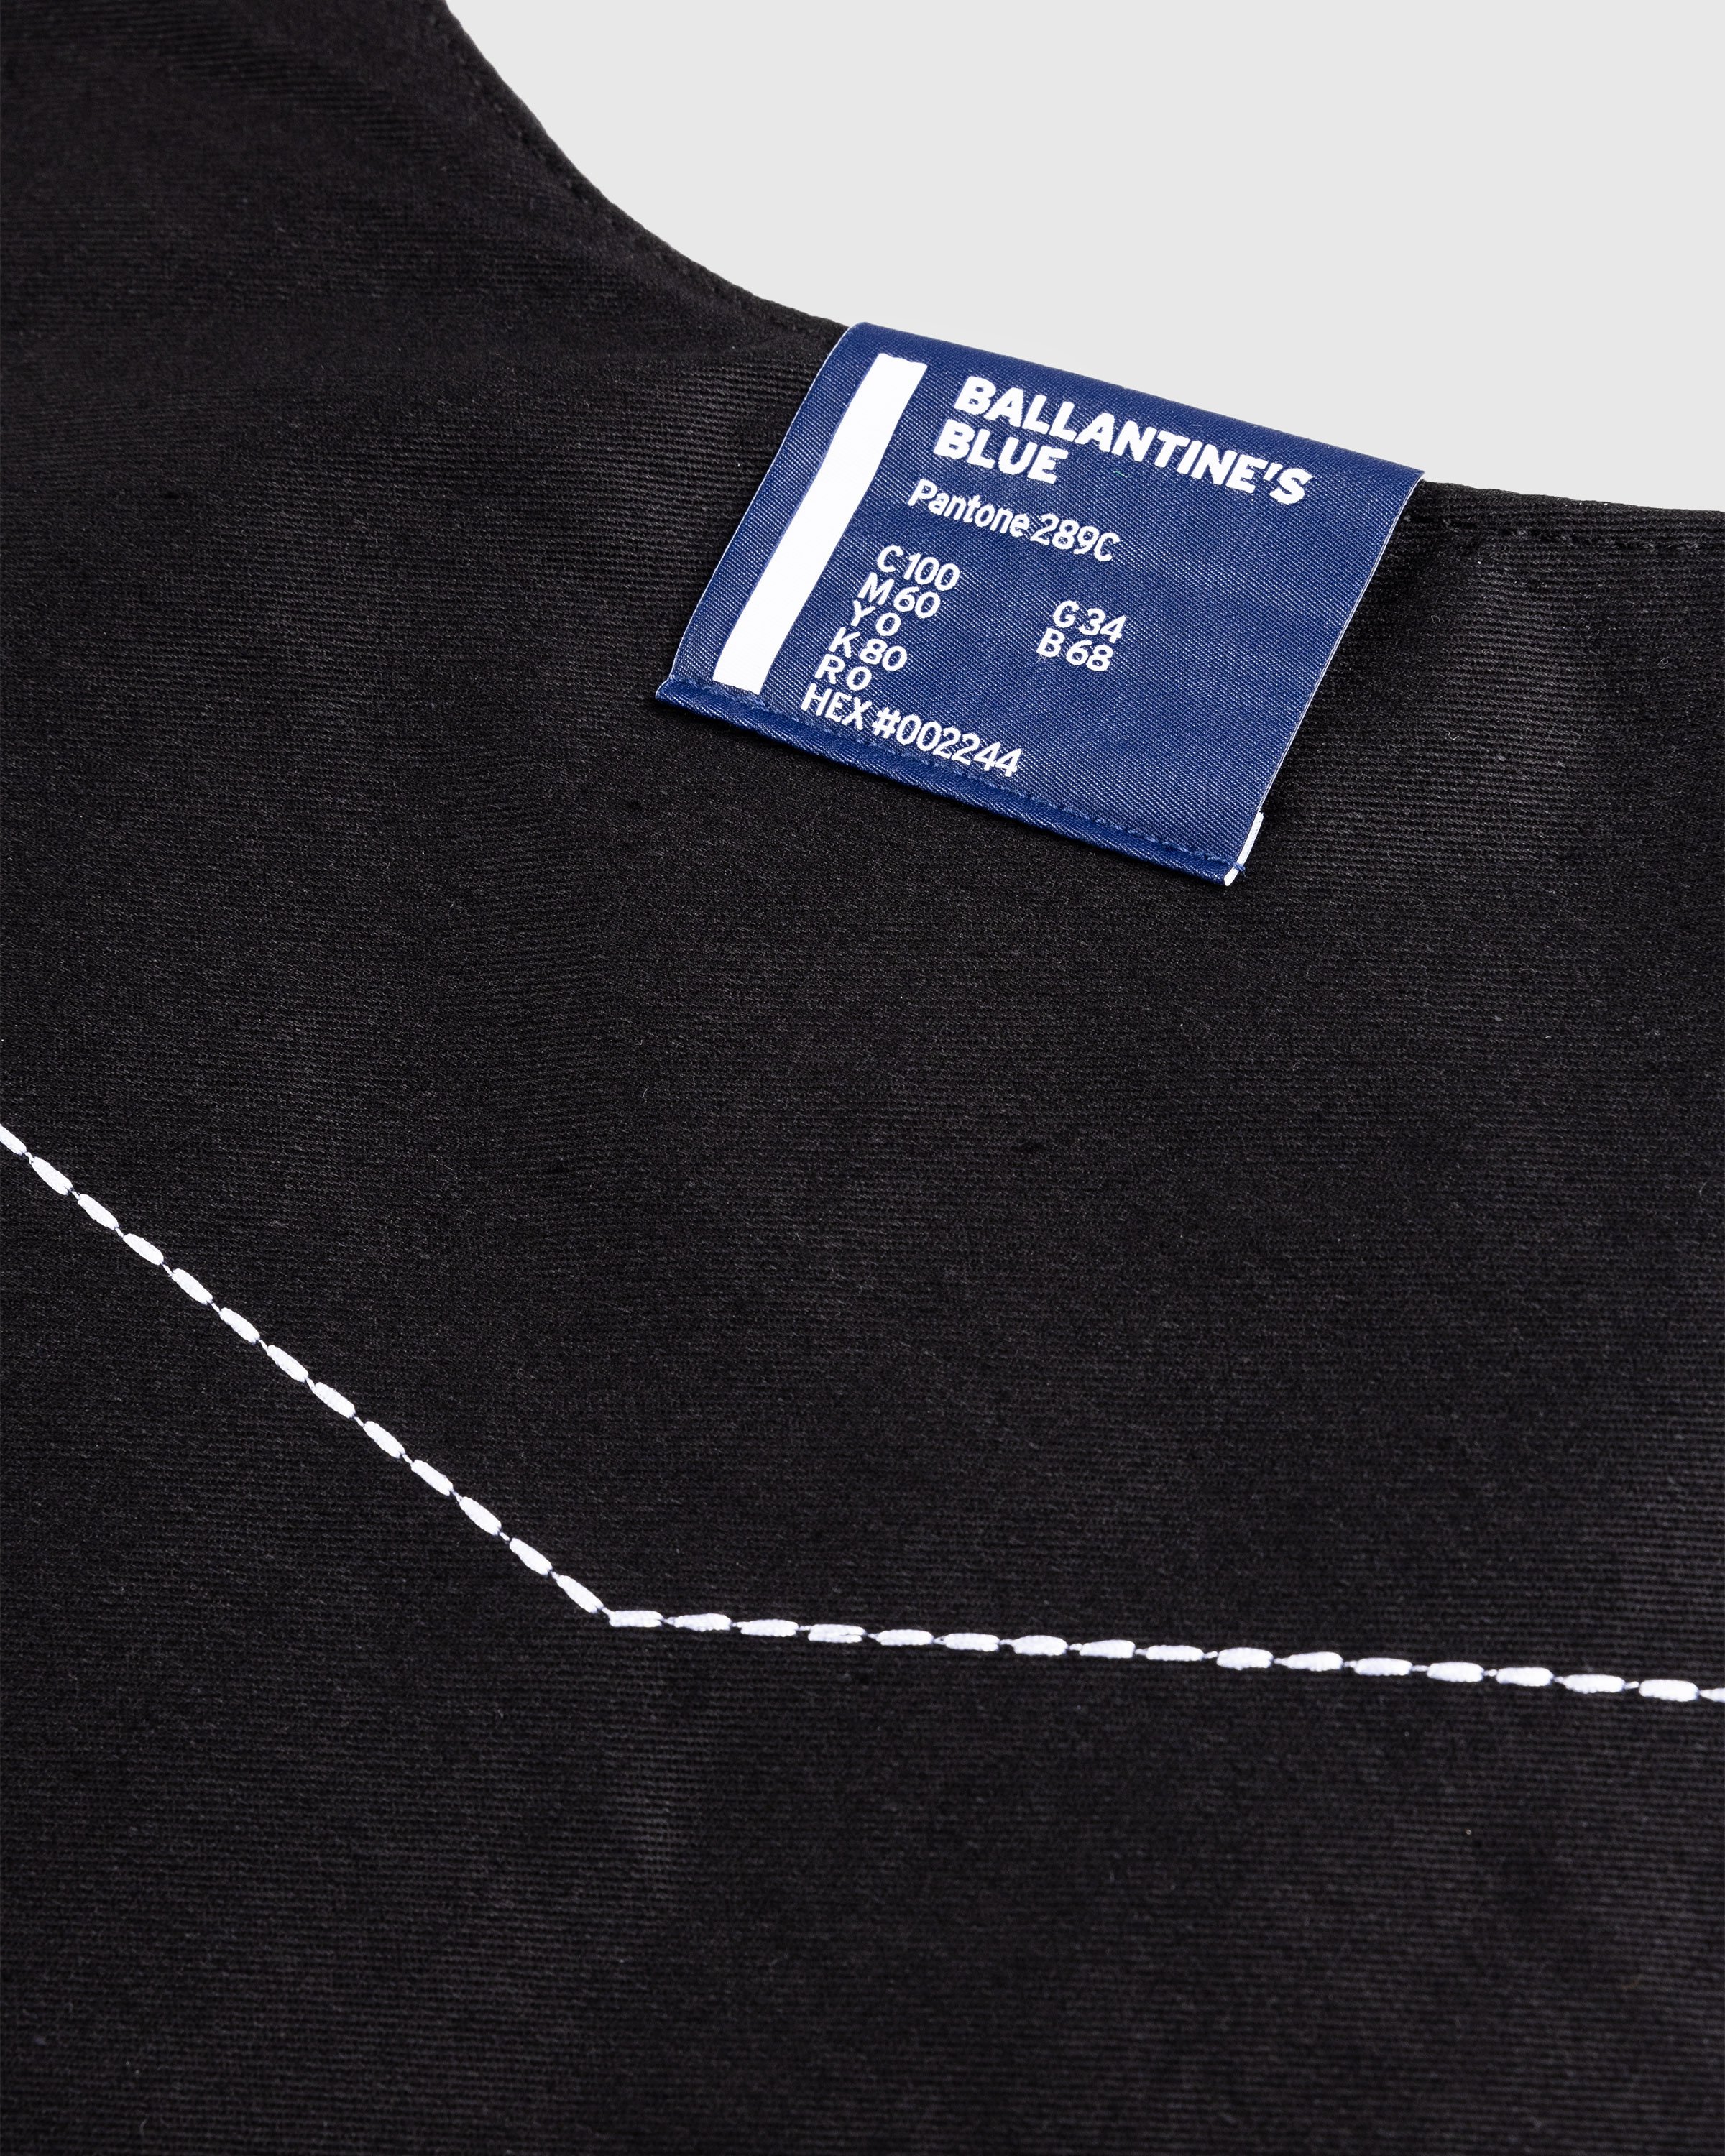 Ballantine's x NEIGHBORHOOD. - Tote Bag Black - Accessories - Black - Image 5